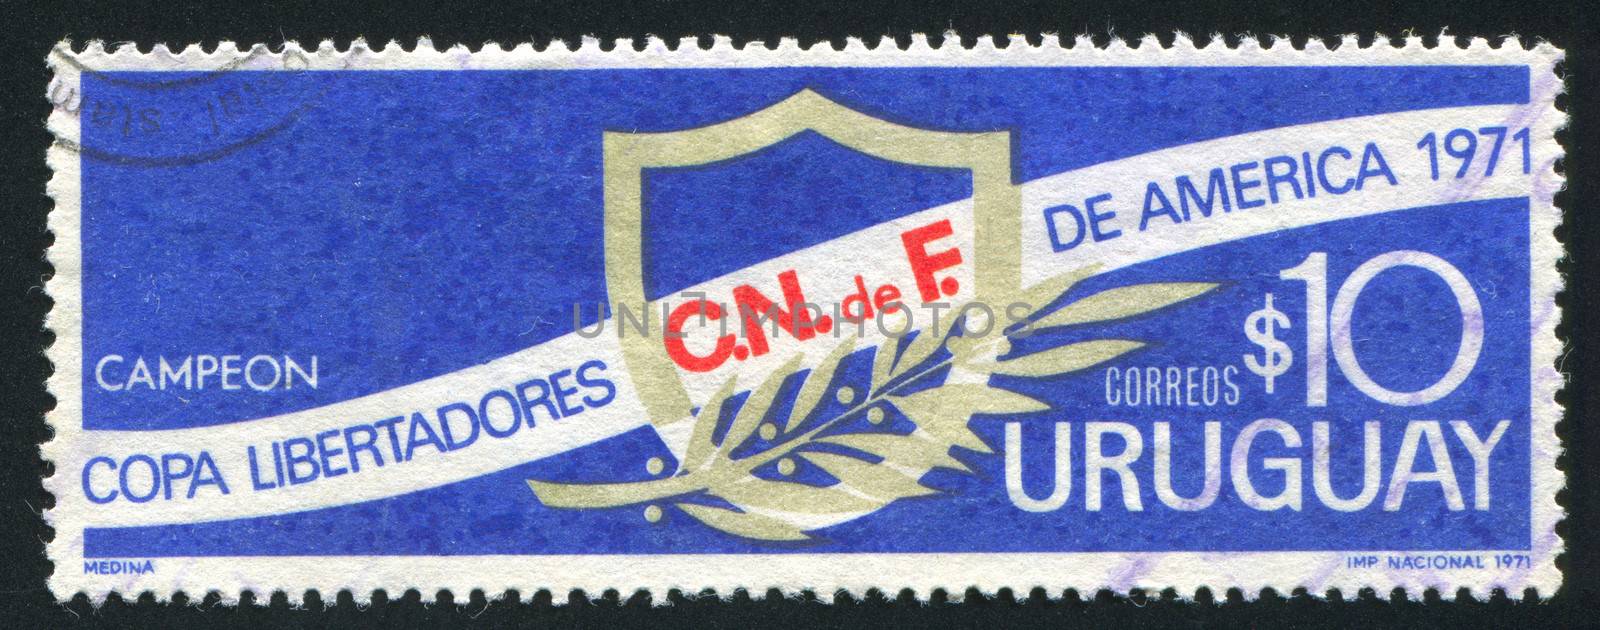 URUGUAY - CIRCA 1971: stamp printed by Uruguay, shows Emblem and Laurel, circa 1971